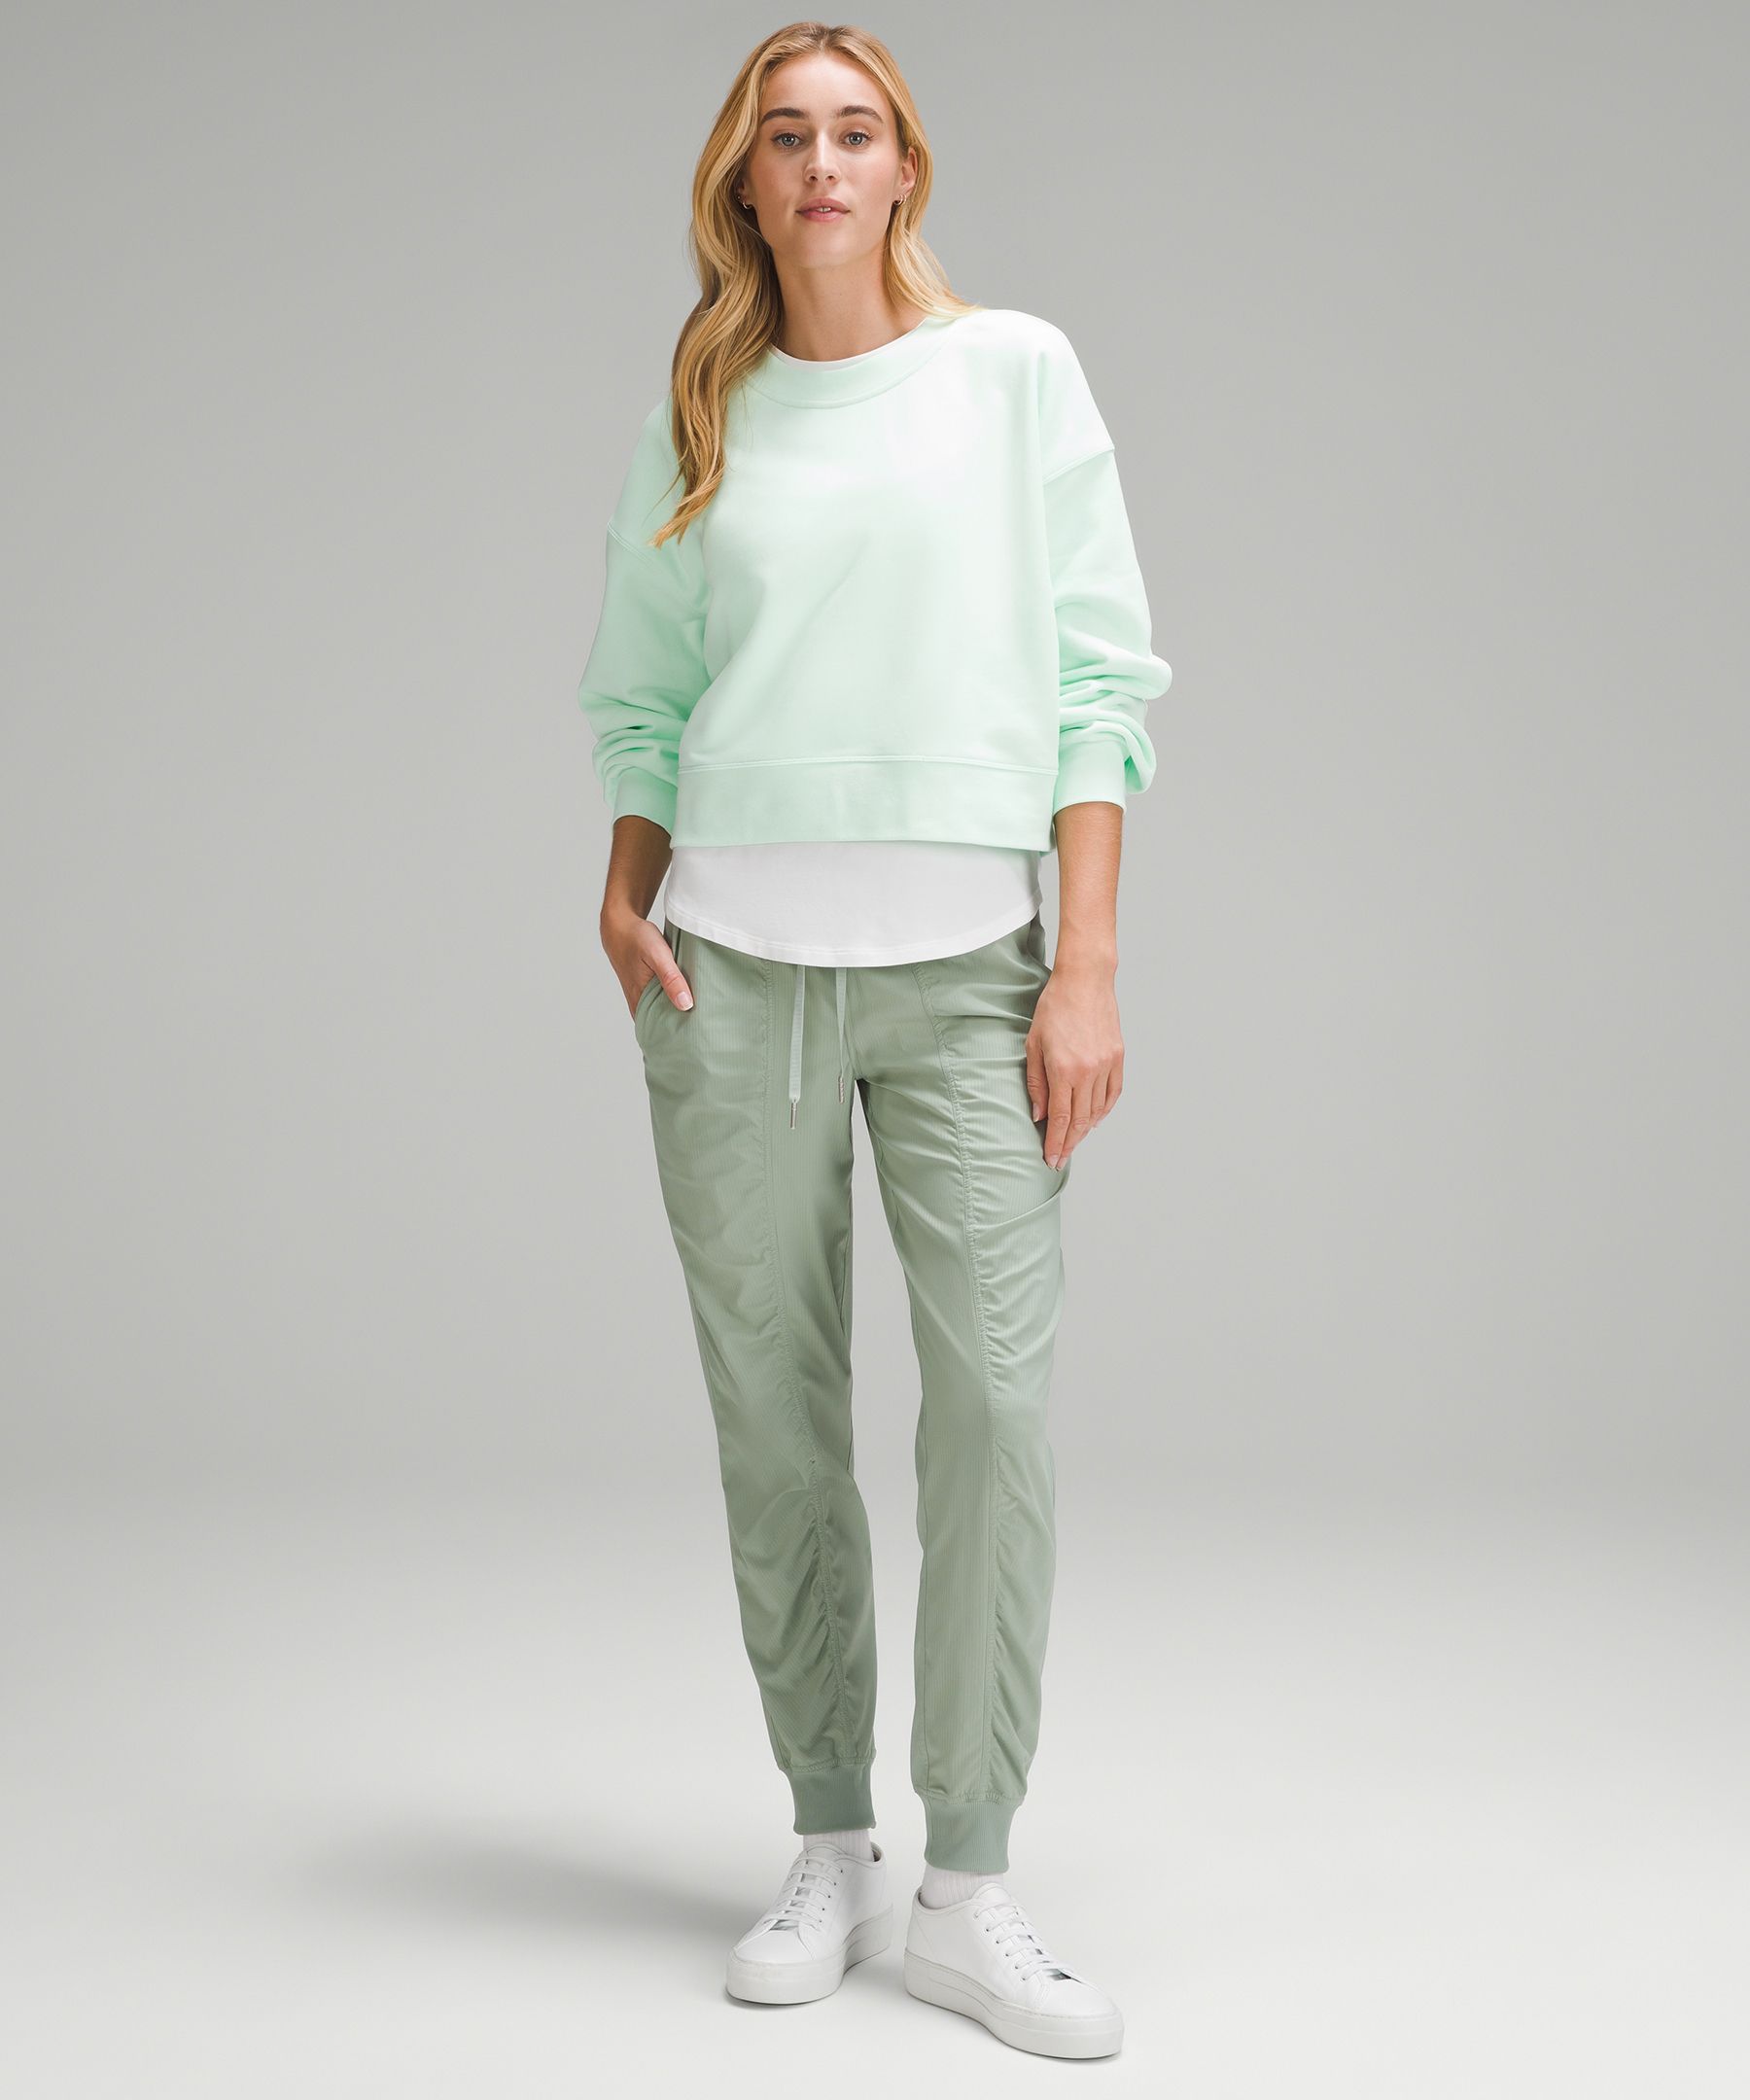 Lululemon Dance Studio Pants Green Size 2 - $70 (40% Off Retail